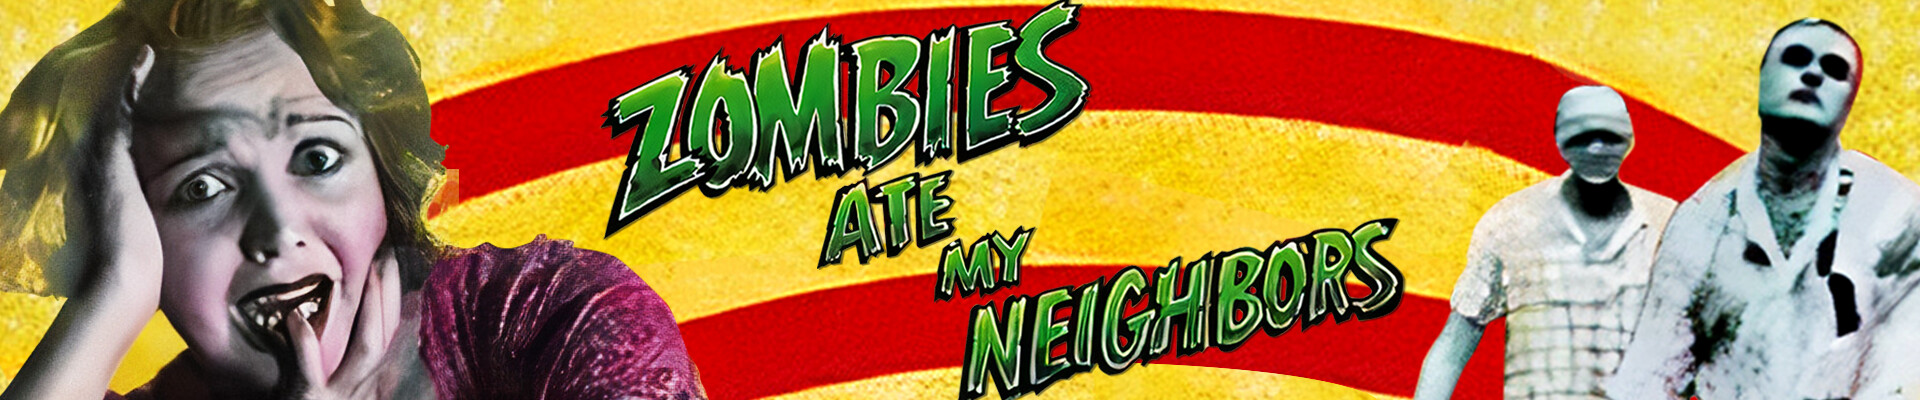 ArtStation - Zombies Ate My Neighbors